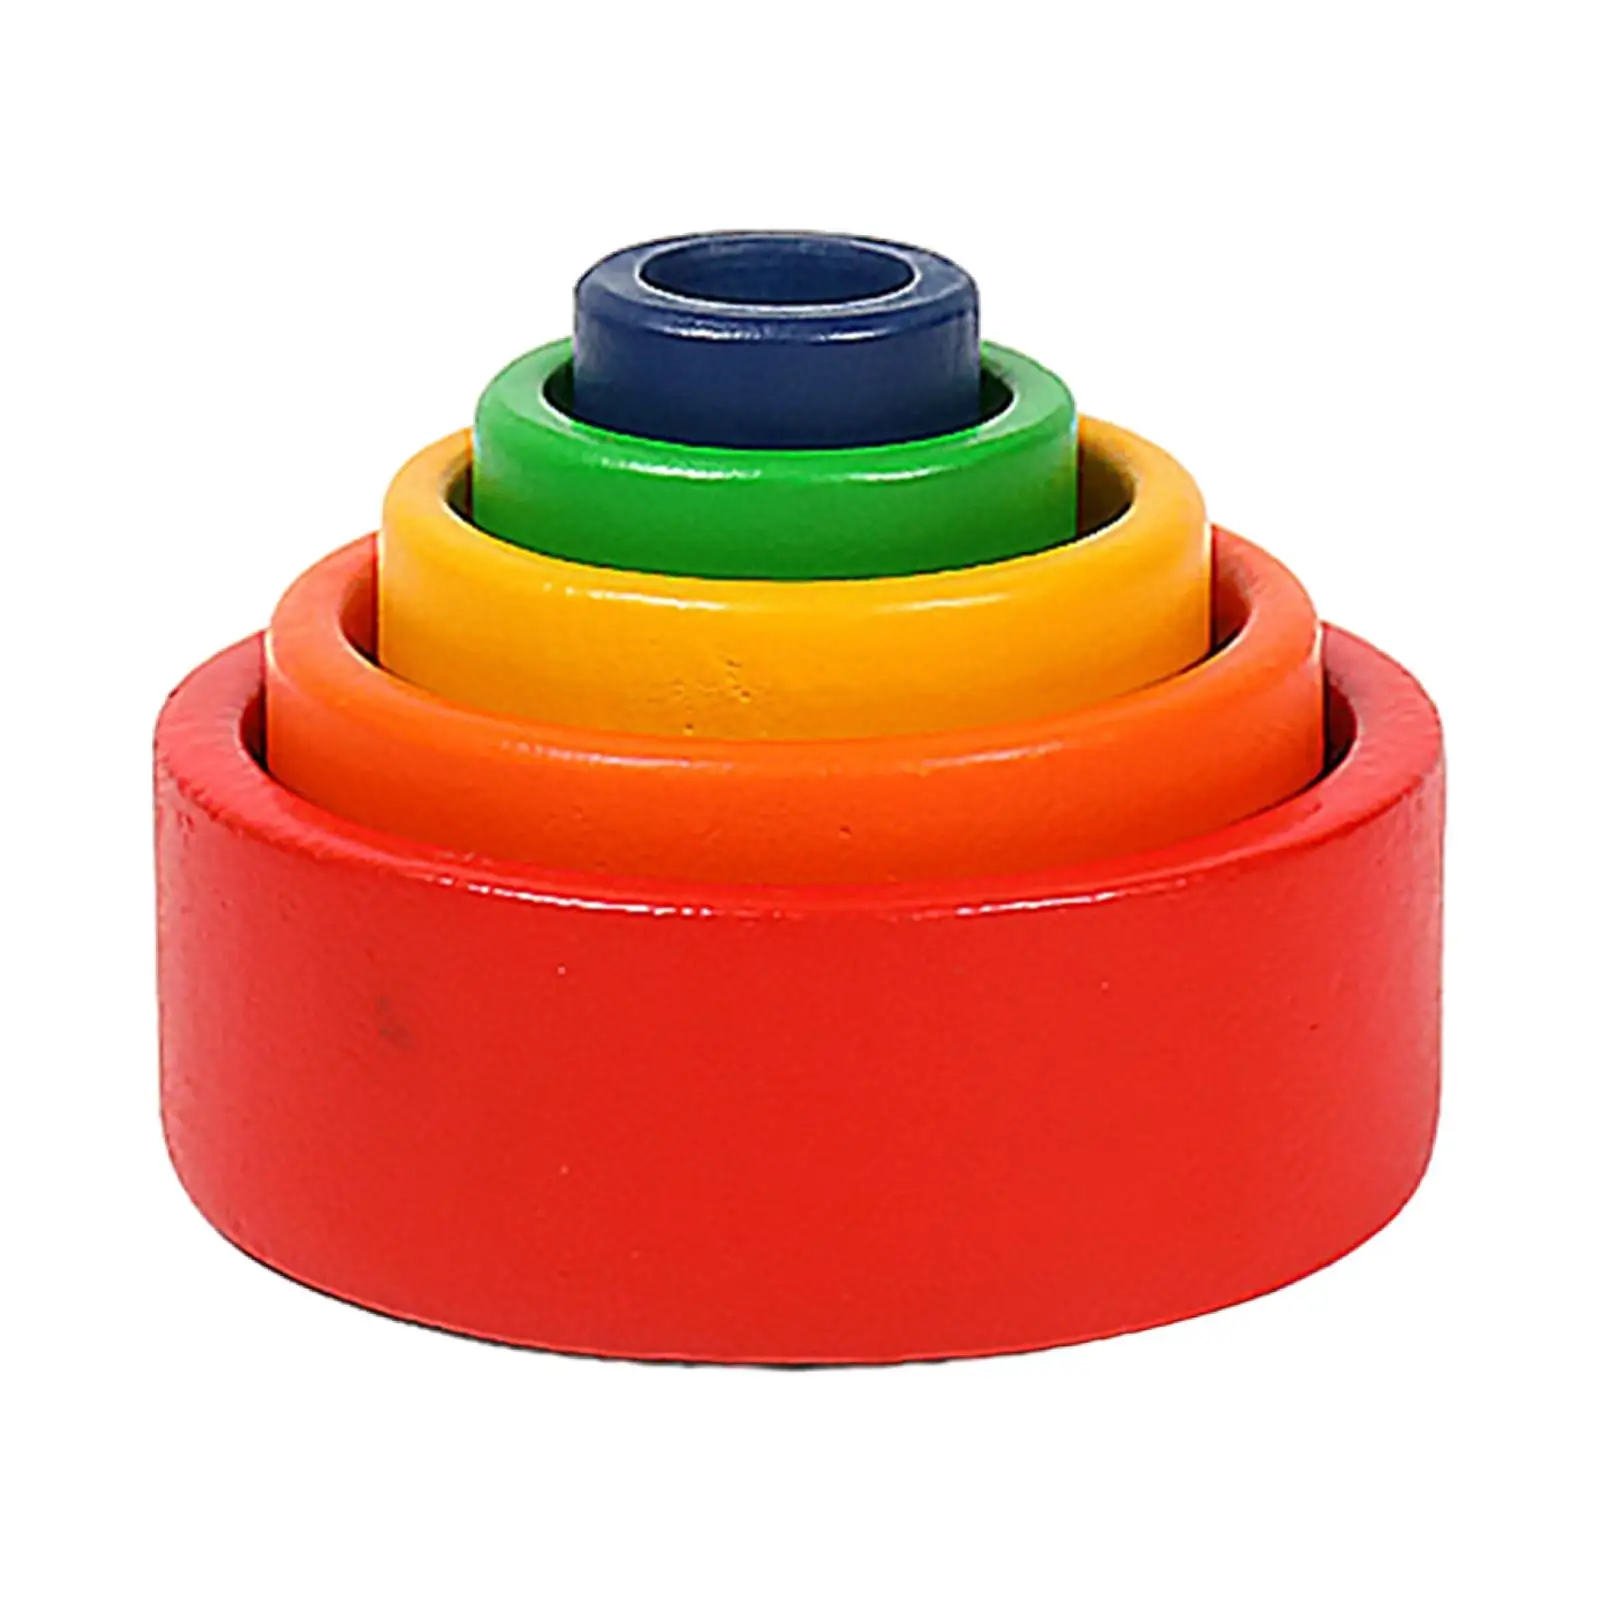 5x Creative Wooden Rainbow Stacker Montessori Toys Rainbow Bowl for Enhancing Thinking Logic Early Development Gift Girls Boys